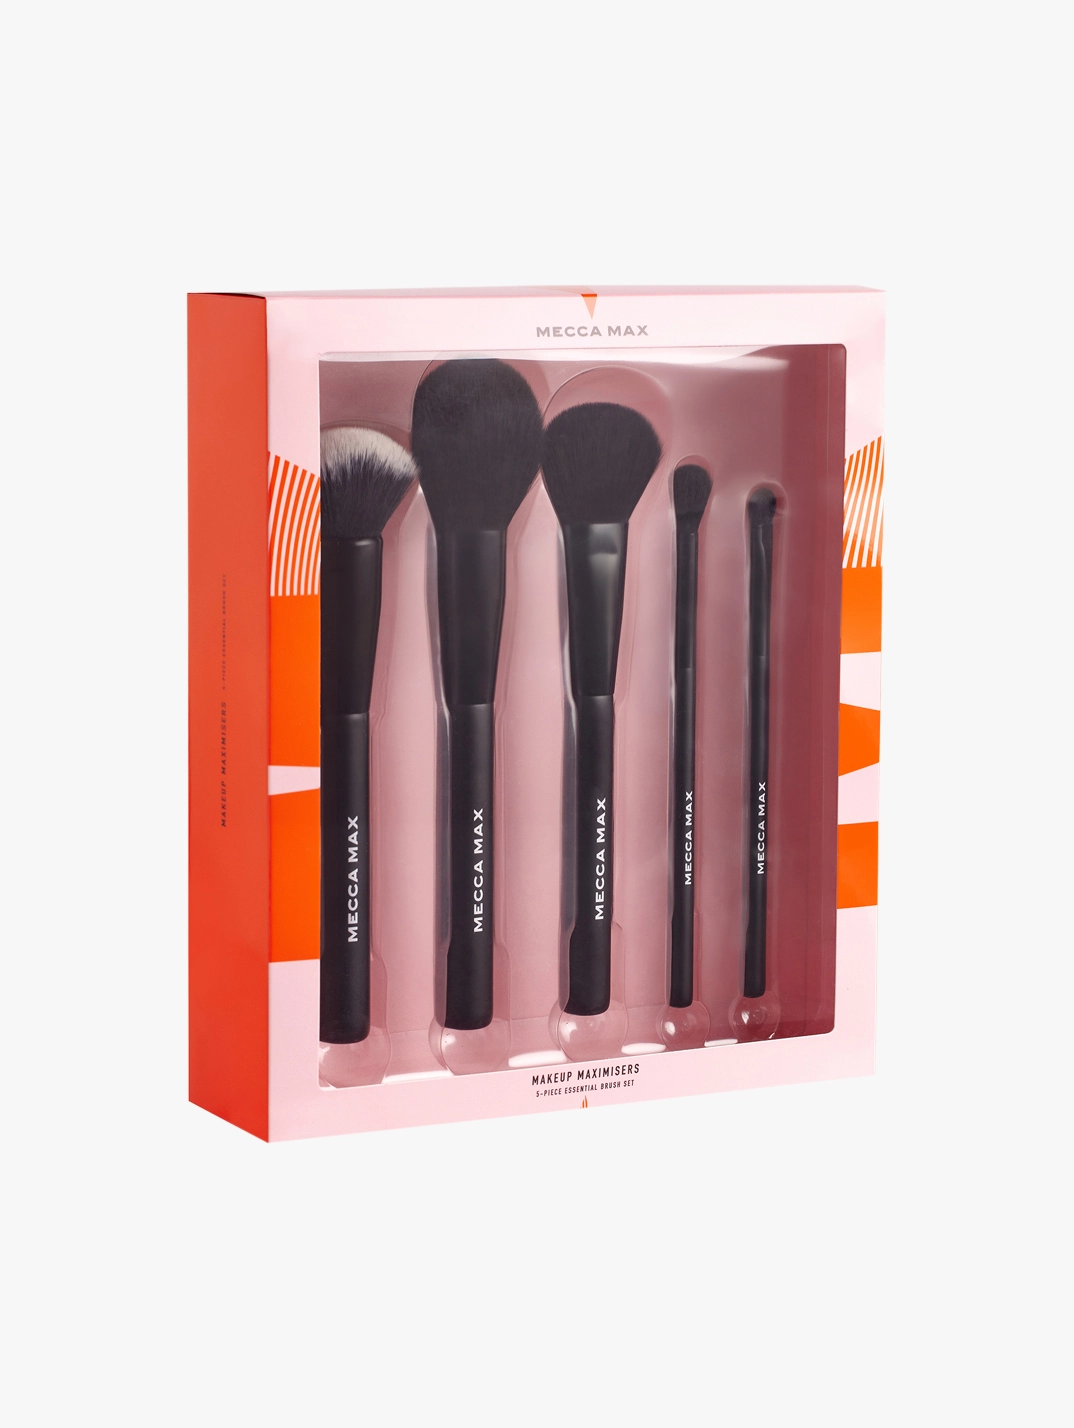 Double Duty Makeup Brush Kit